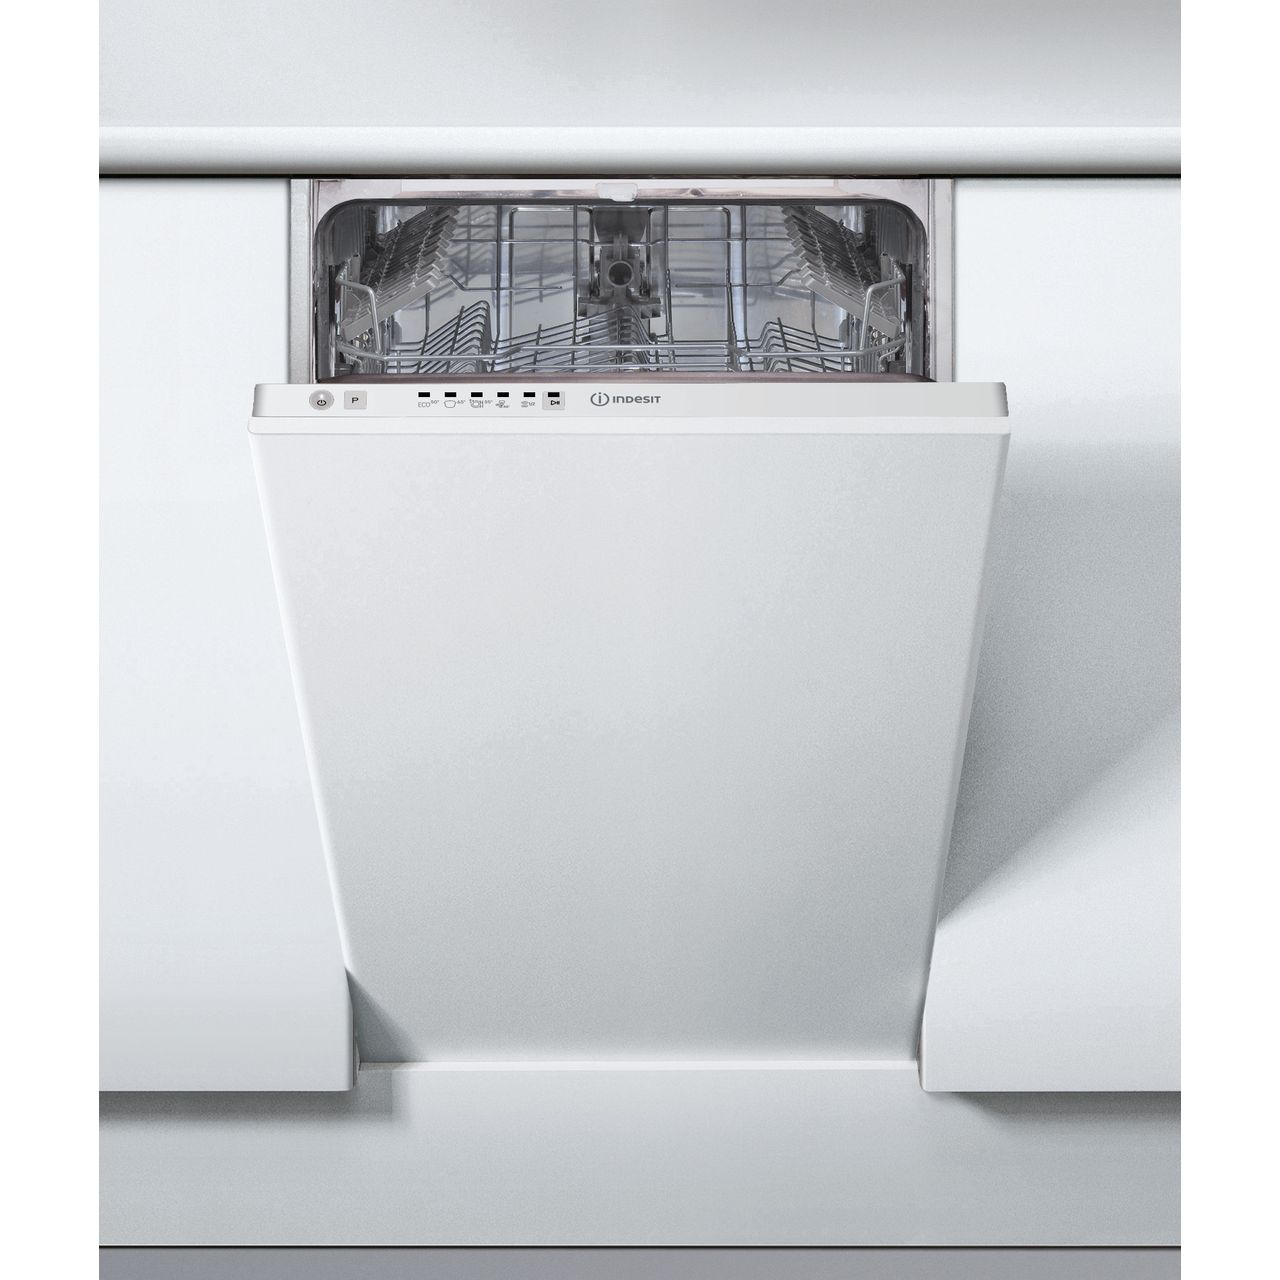 Indesit DSIE2B19UK Fully Integrated Slimline Dishwasher Review